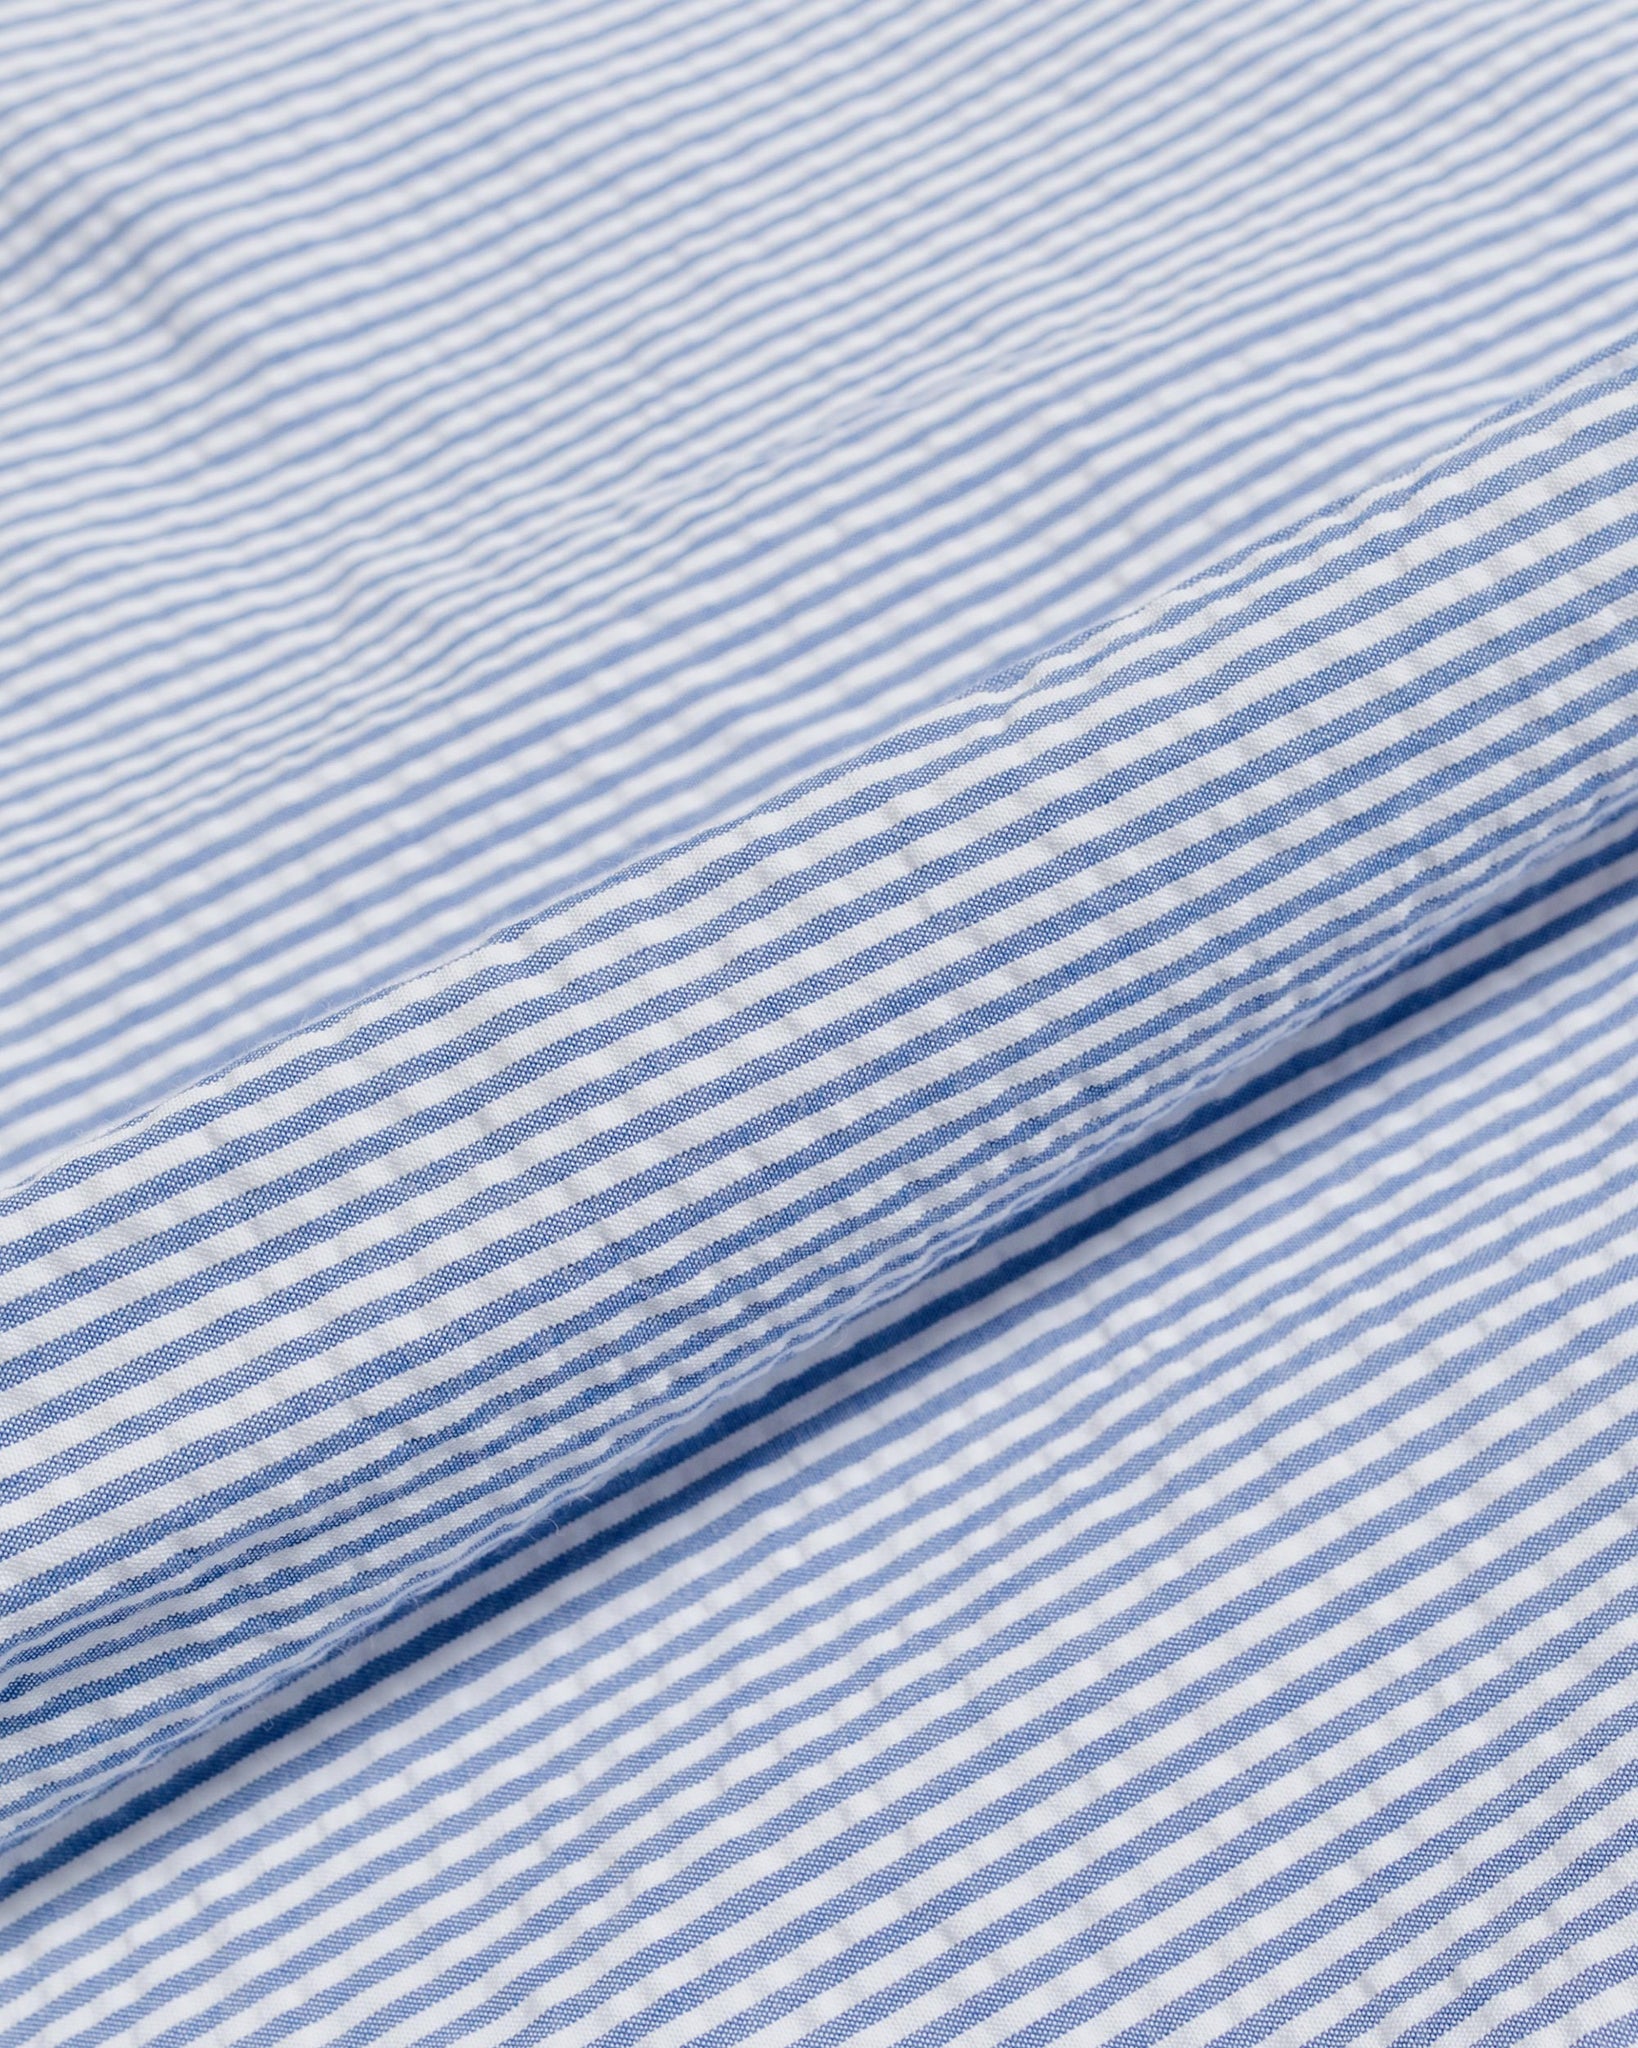 Gitman Vintage Bros. Blue Stripe Seersucker Shirt fabric